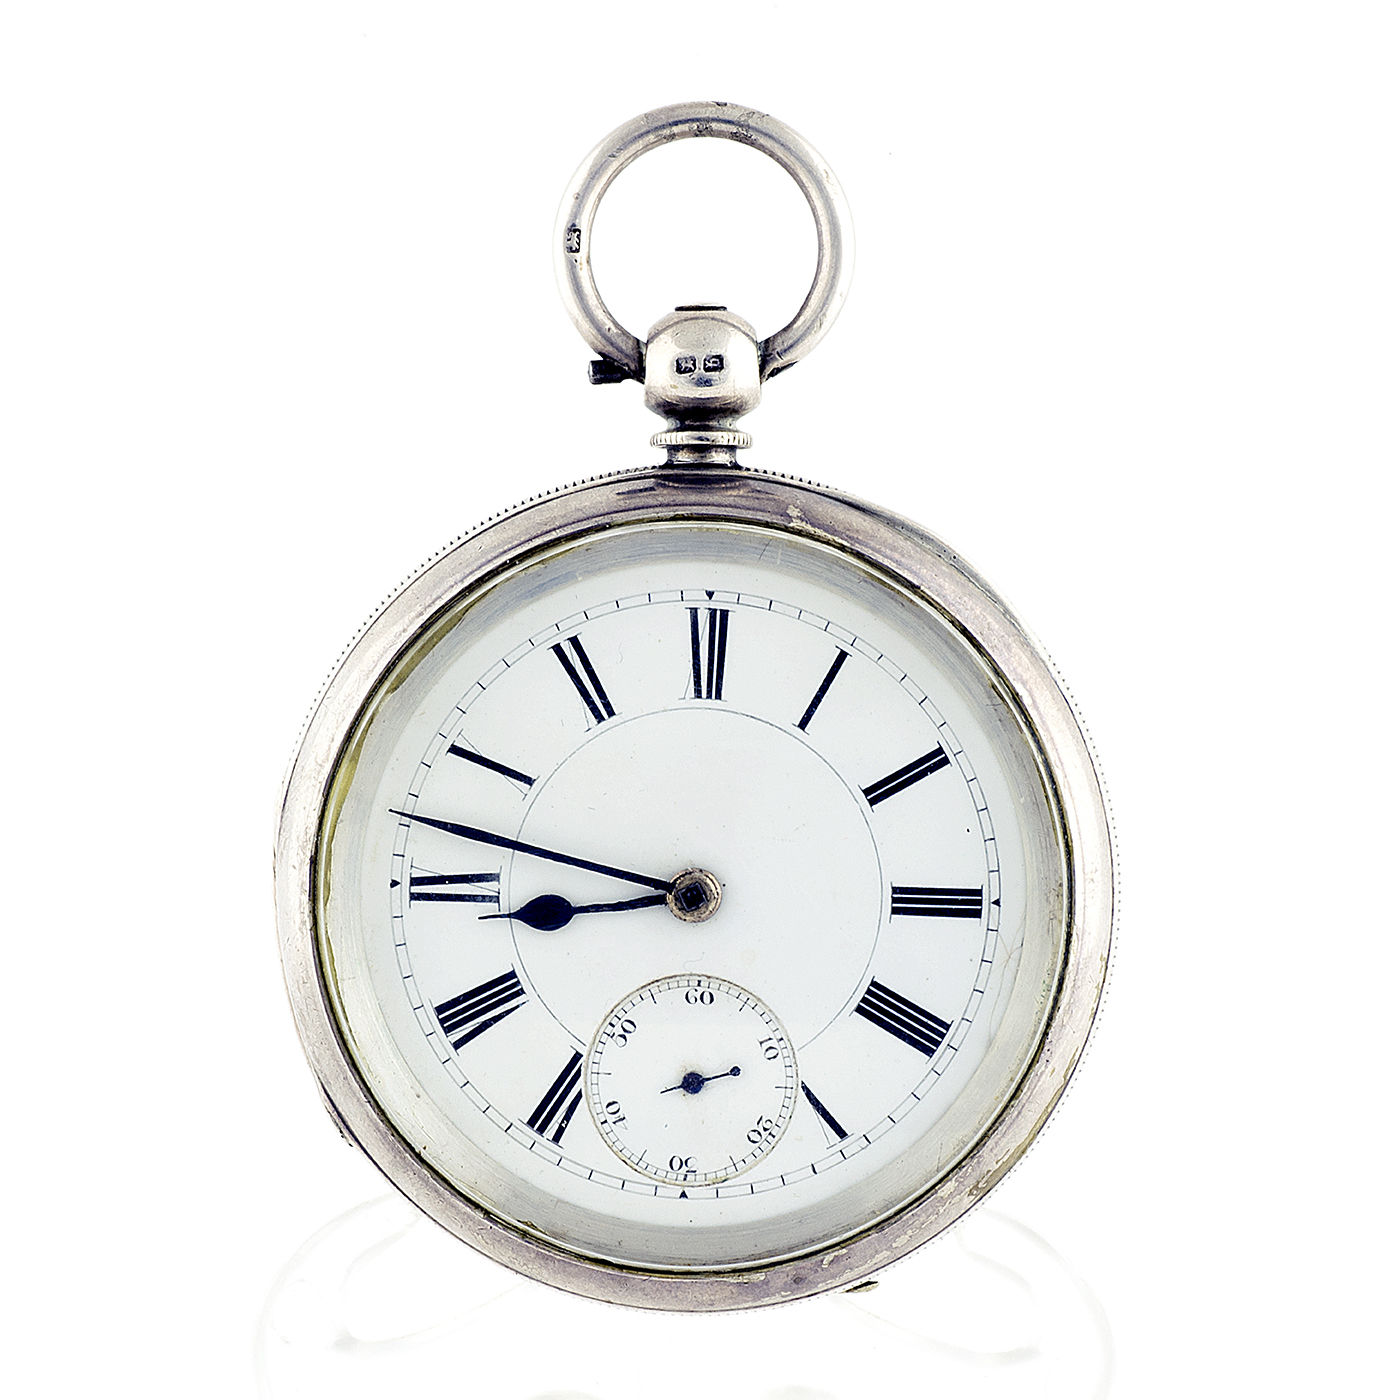 W. EHRHARDT. Reloj Inglés de Bolsillo para caballero, lepine. Birminghan, 1890.